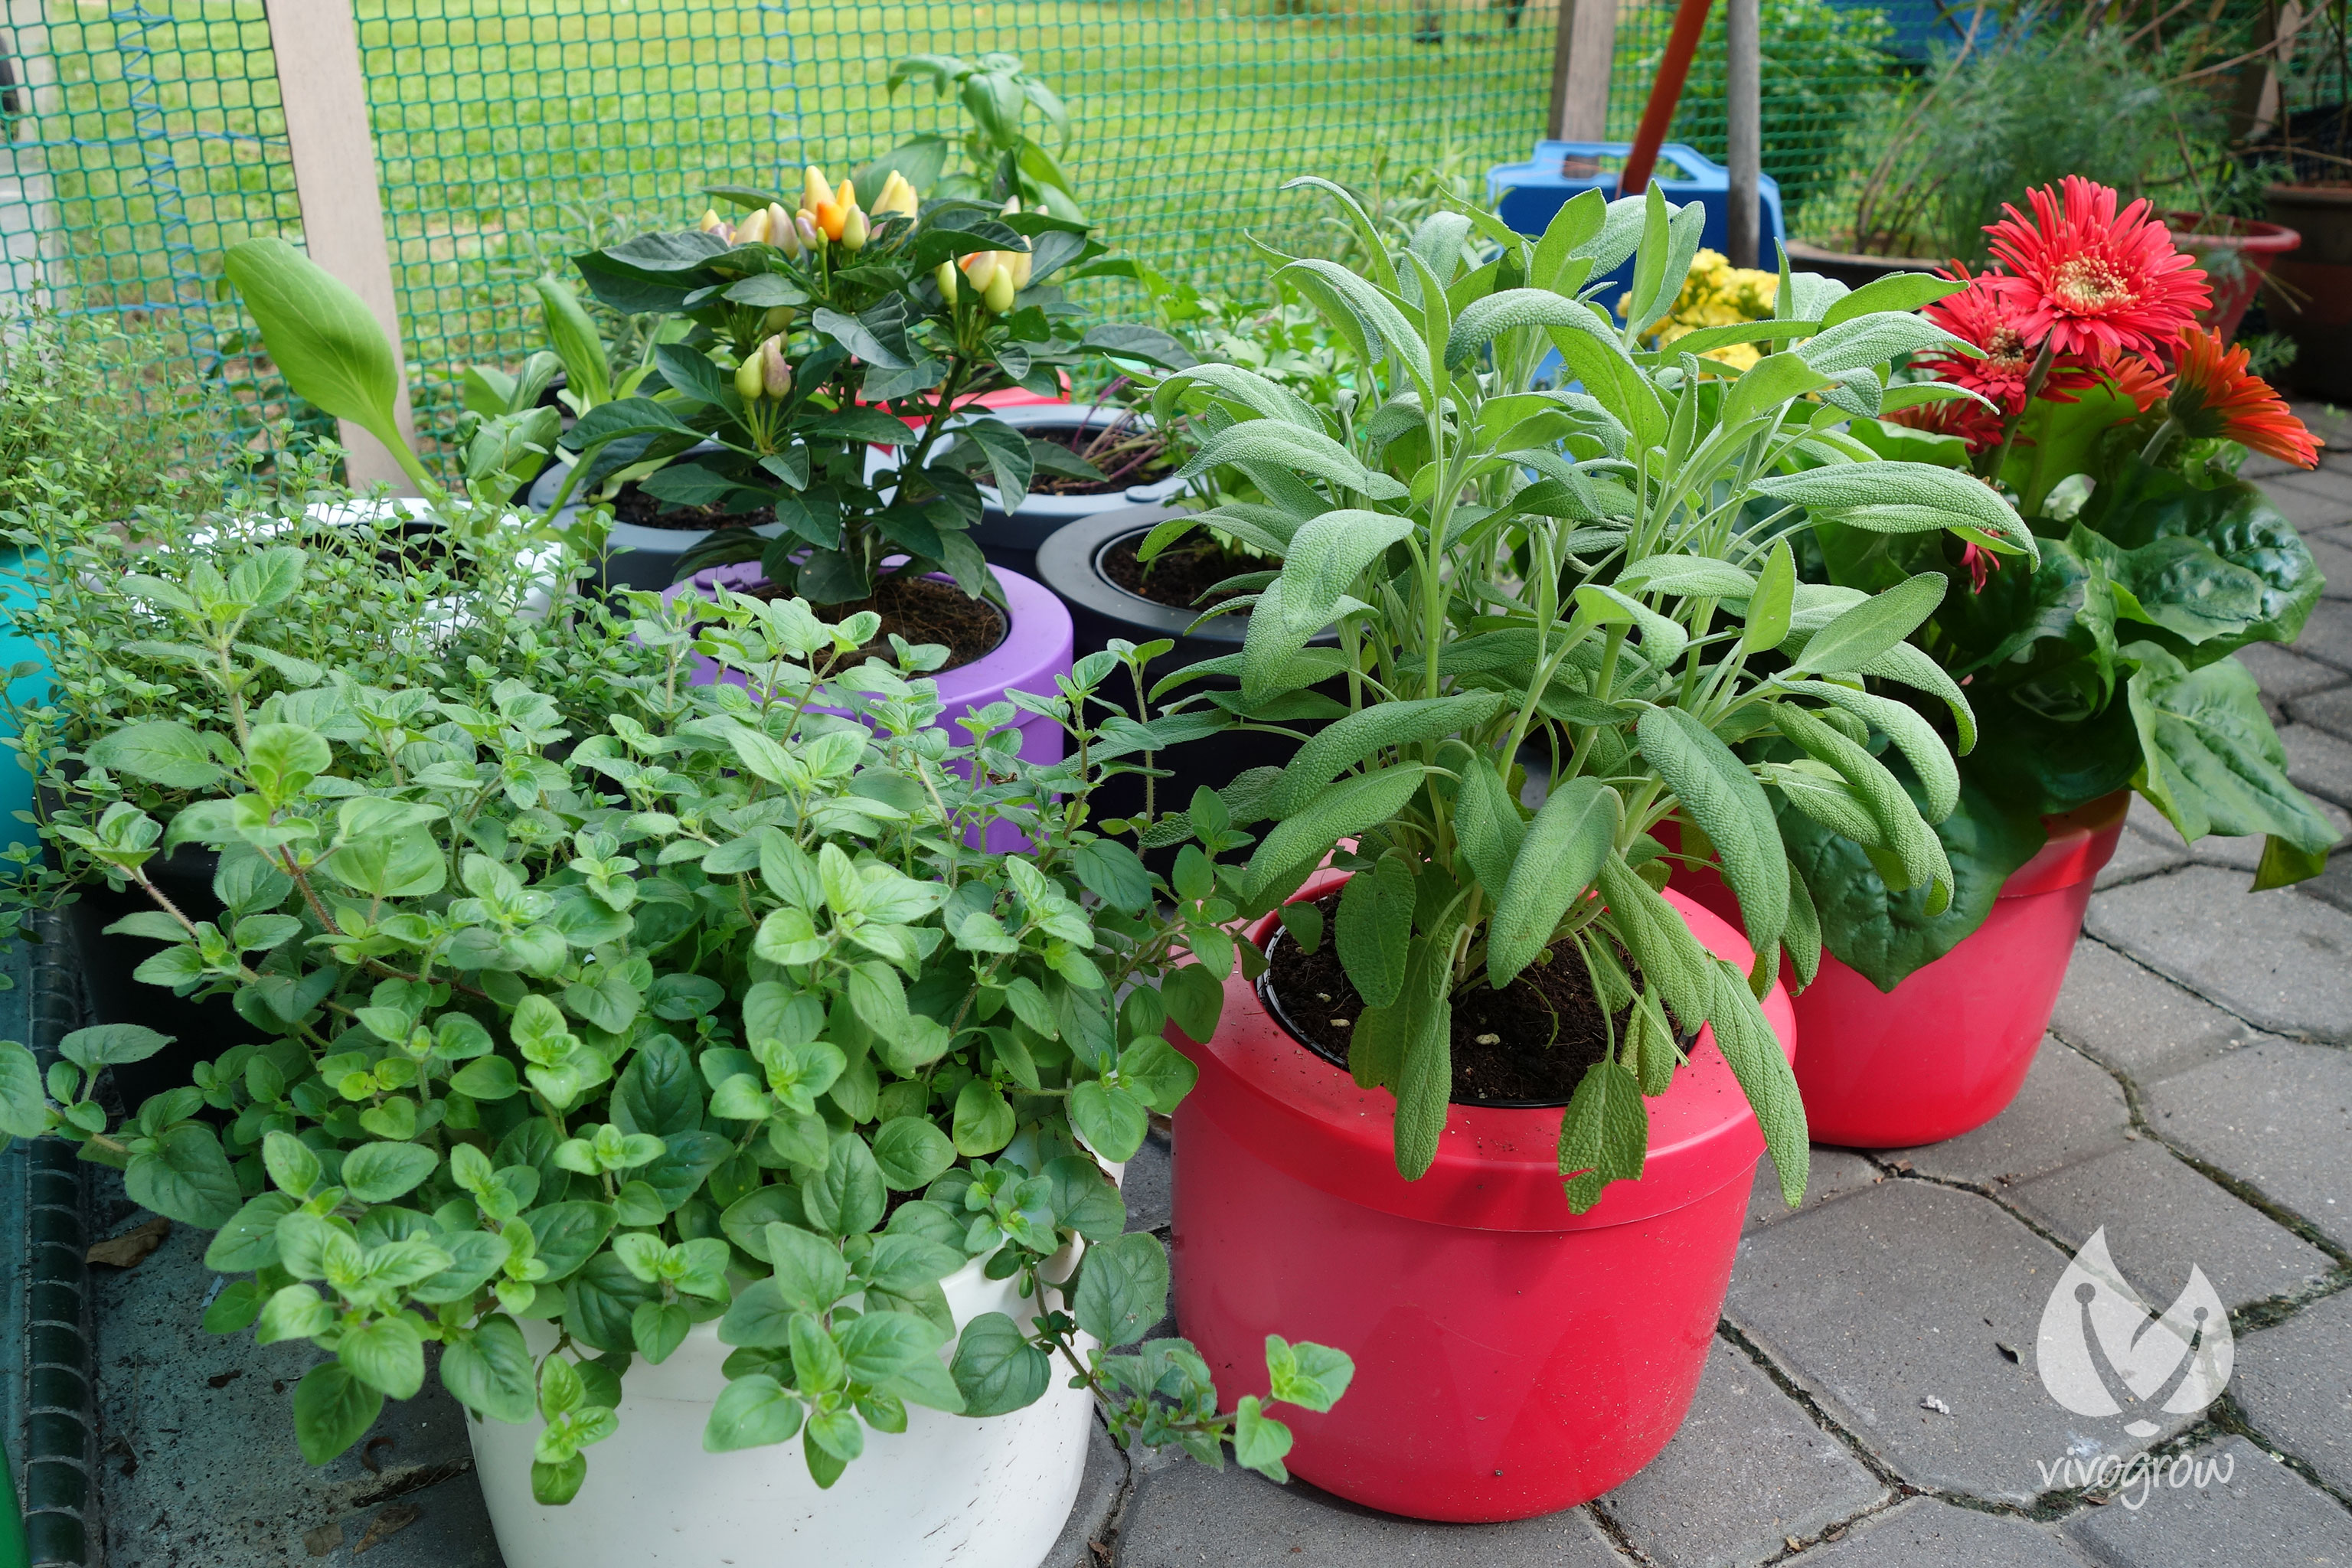 Vivogrow Herb Pot: Plant-Driven Technology To Meet Growing ...